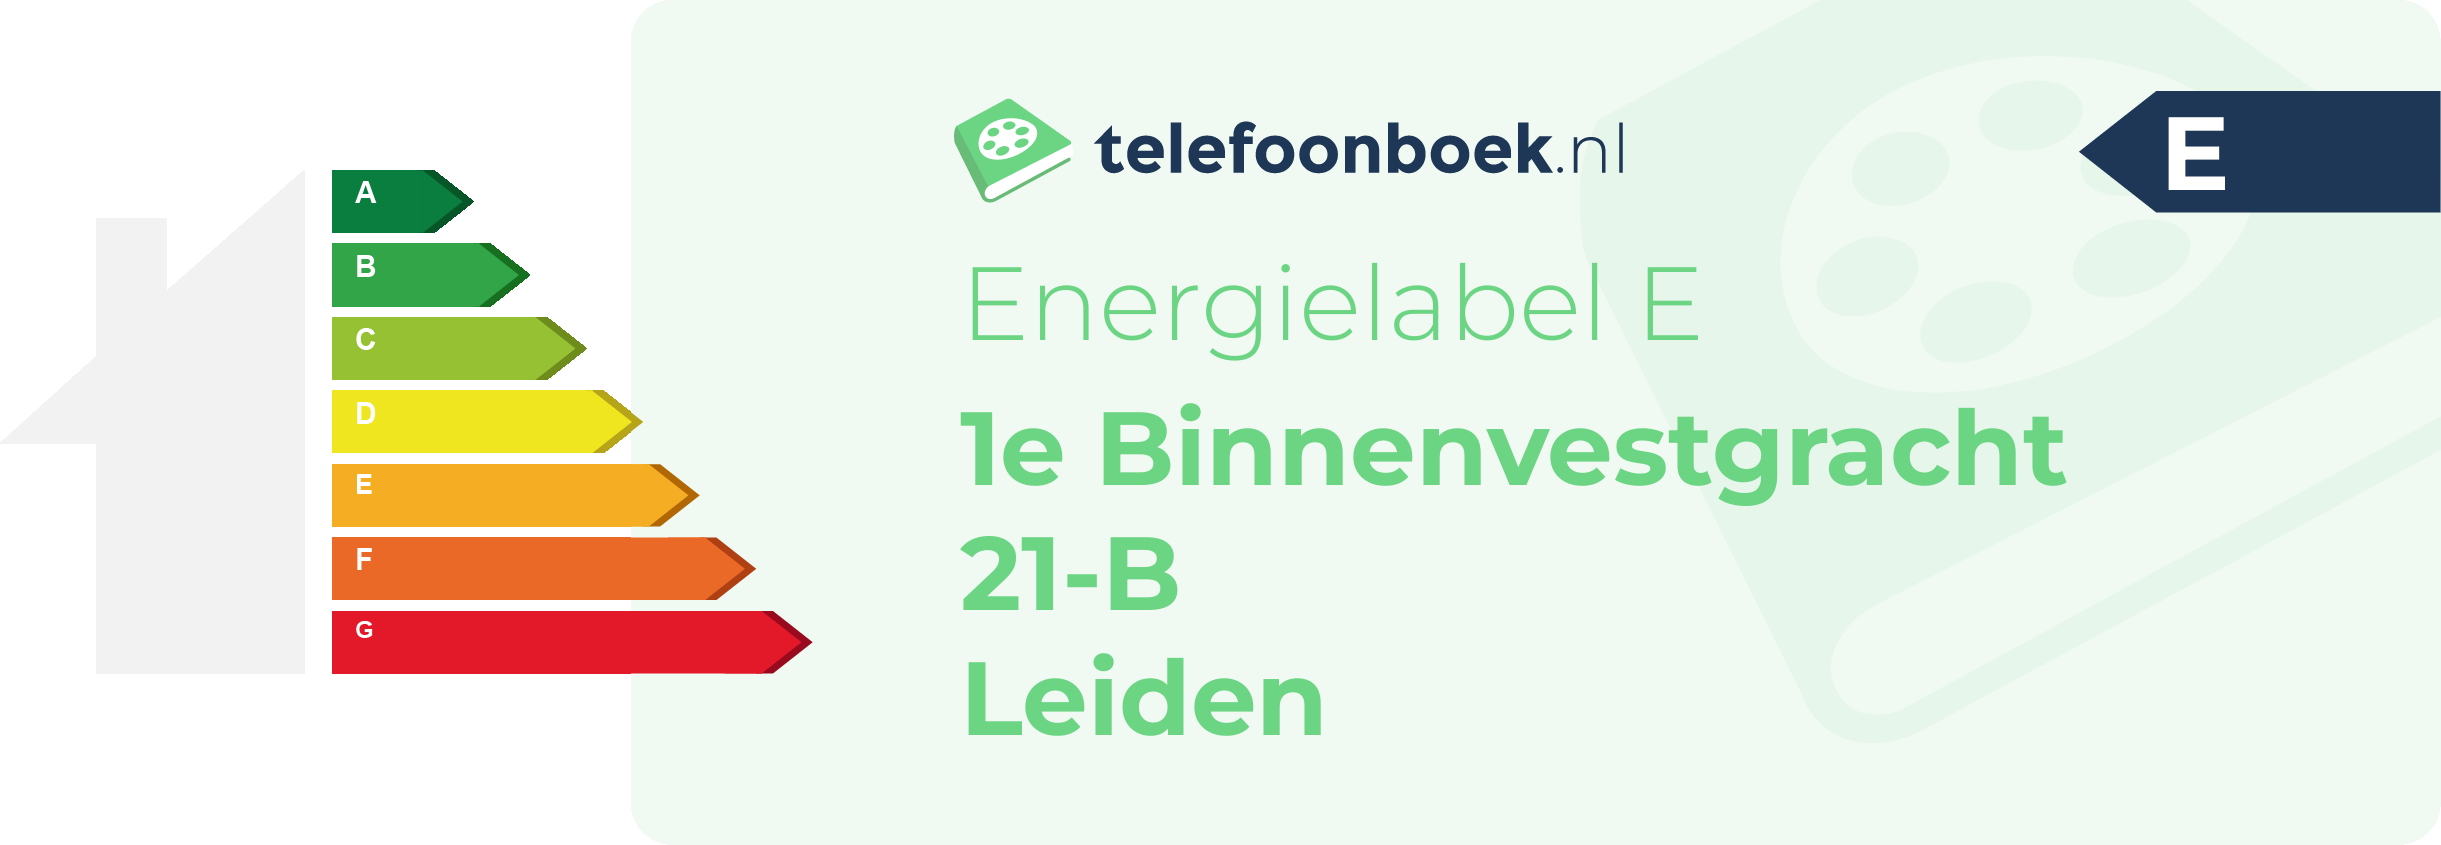 Energielabel 1e Binnenvestgracht 21-B Leiden